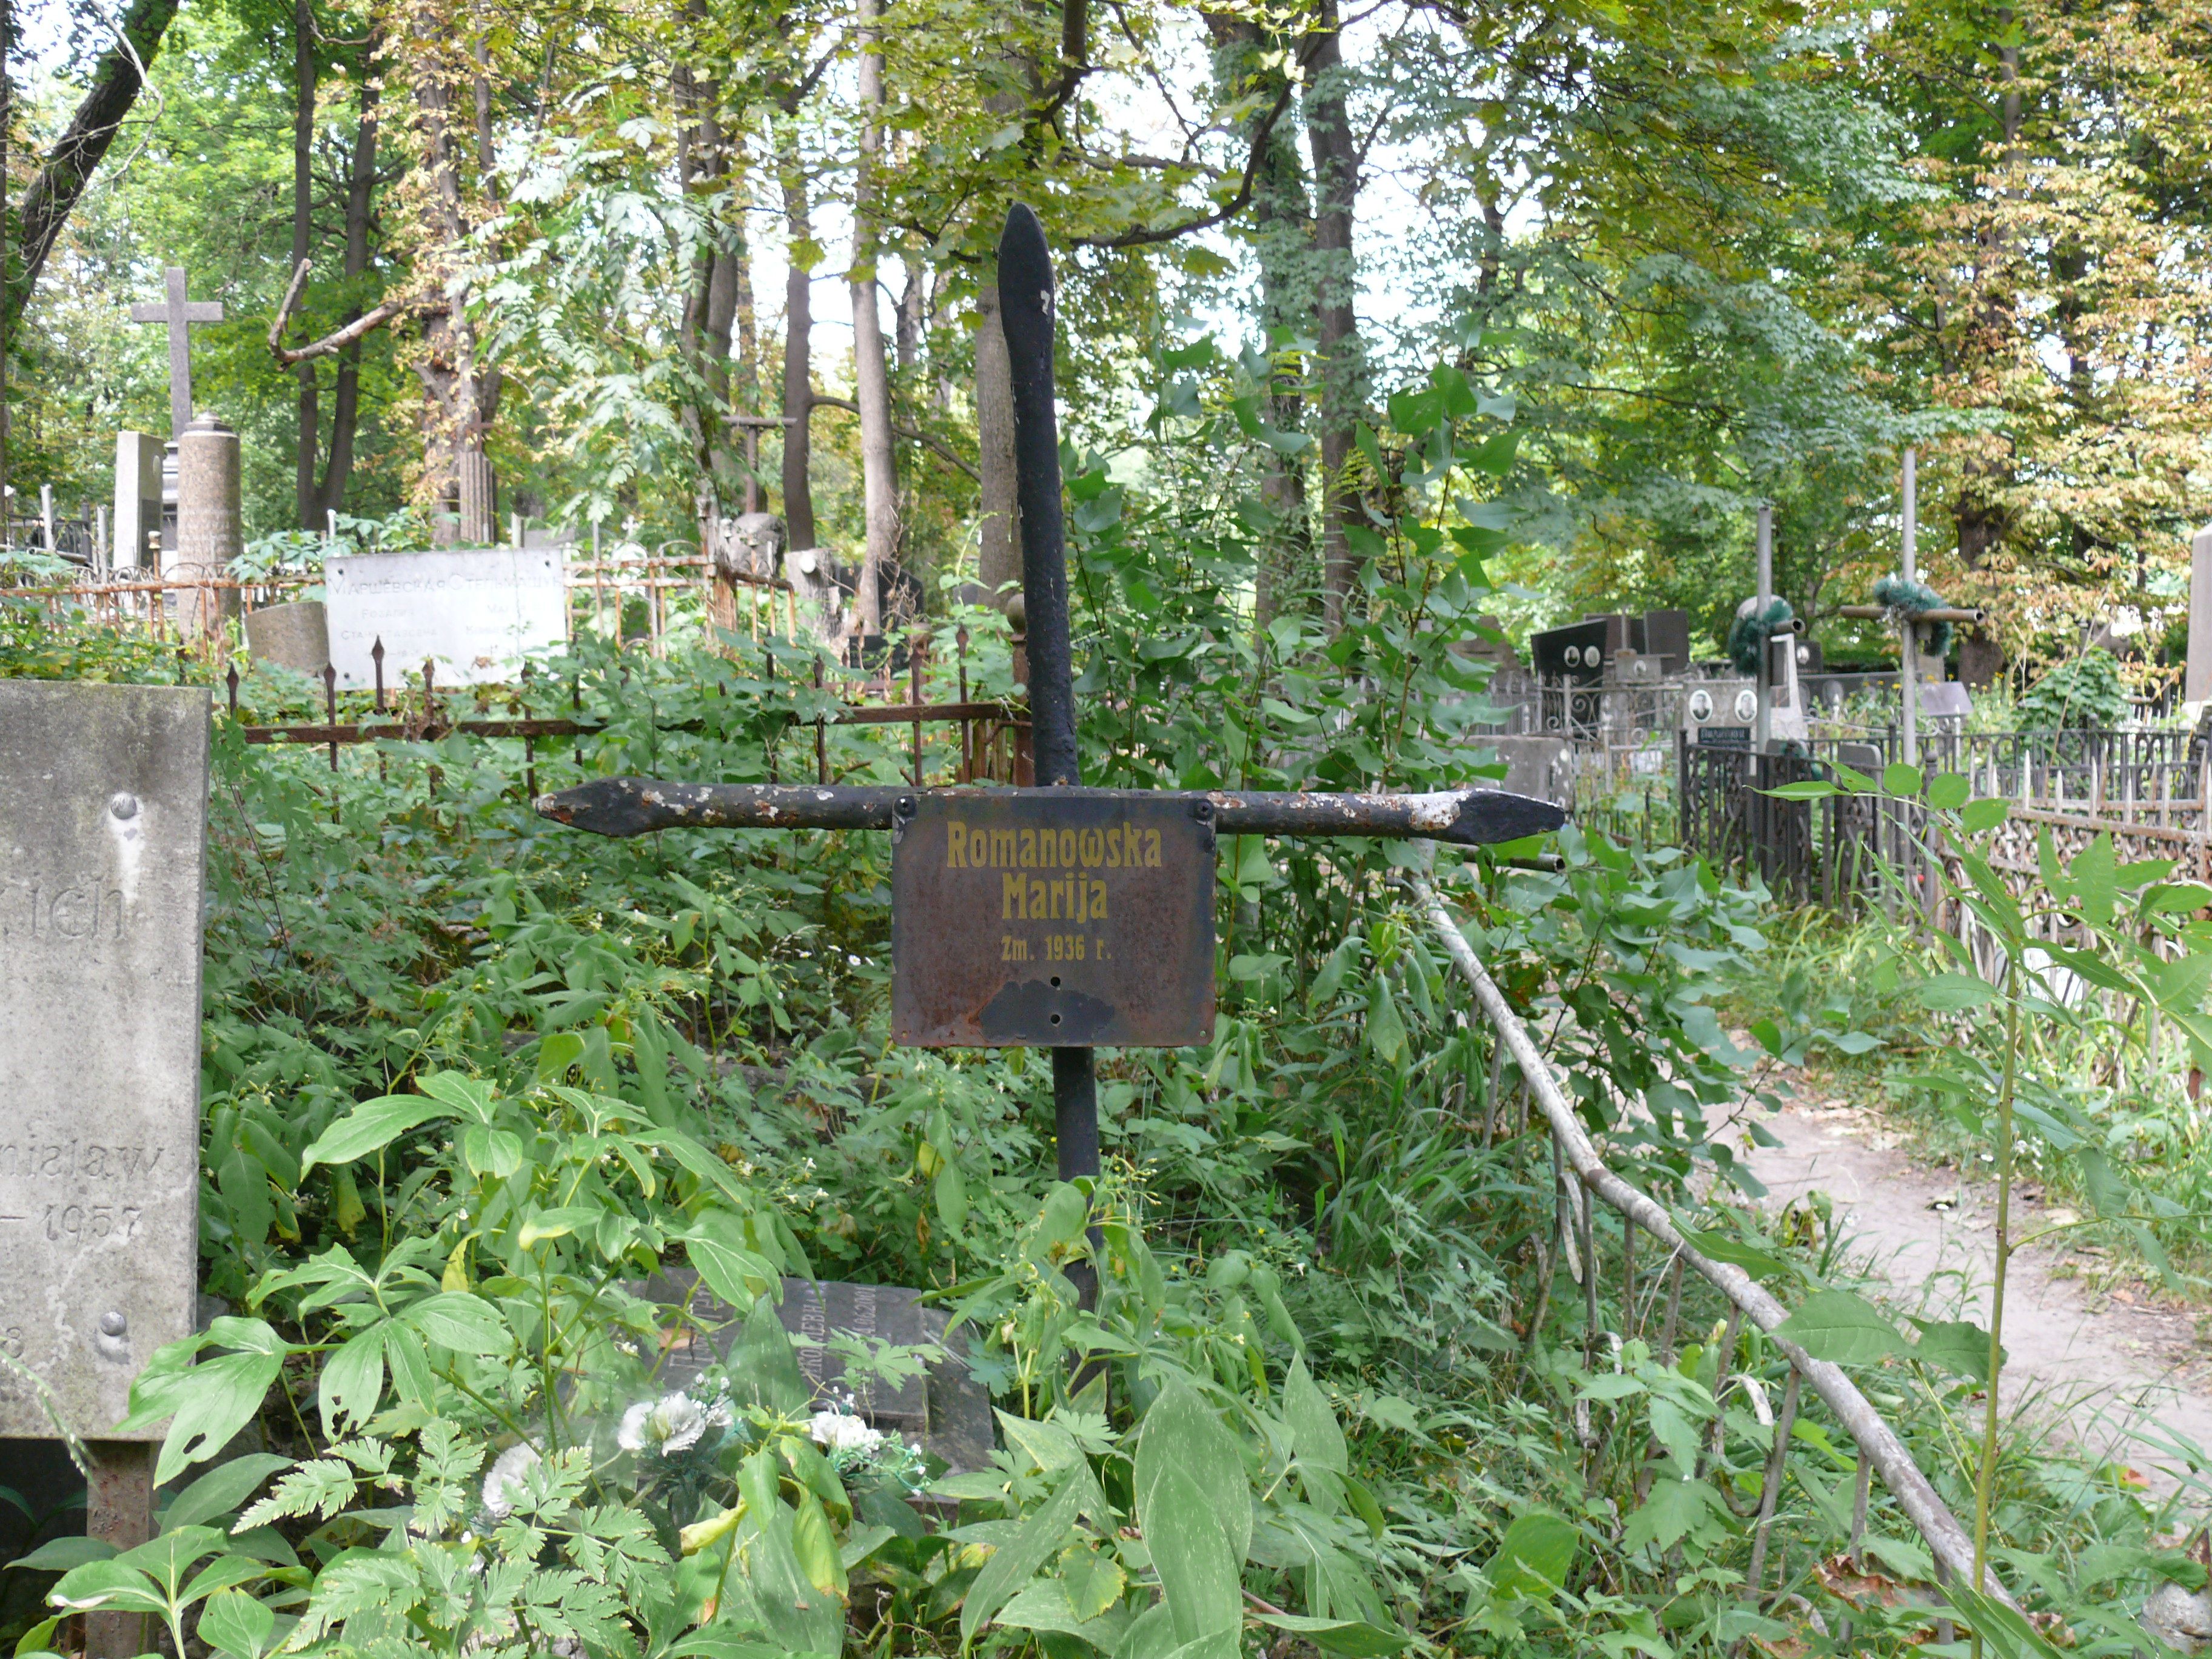 Tombstone of Maria Romanowska